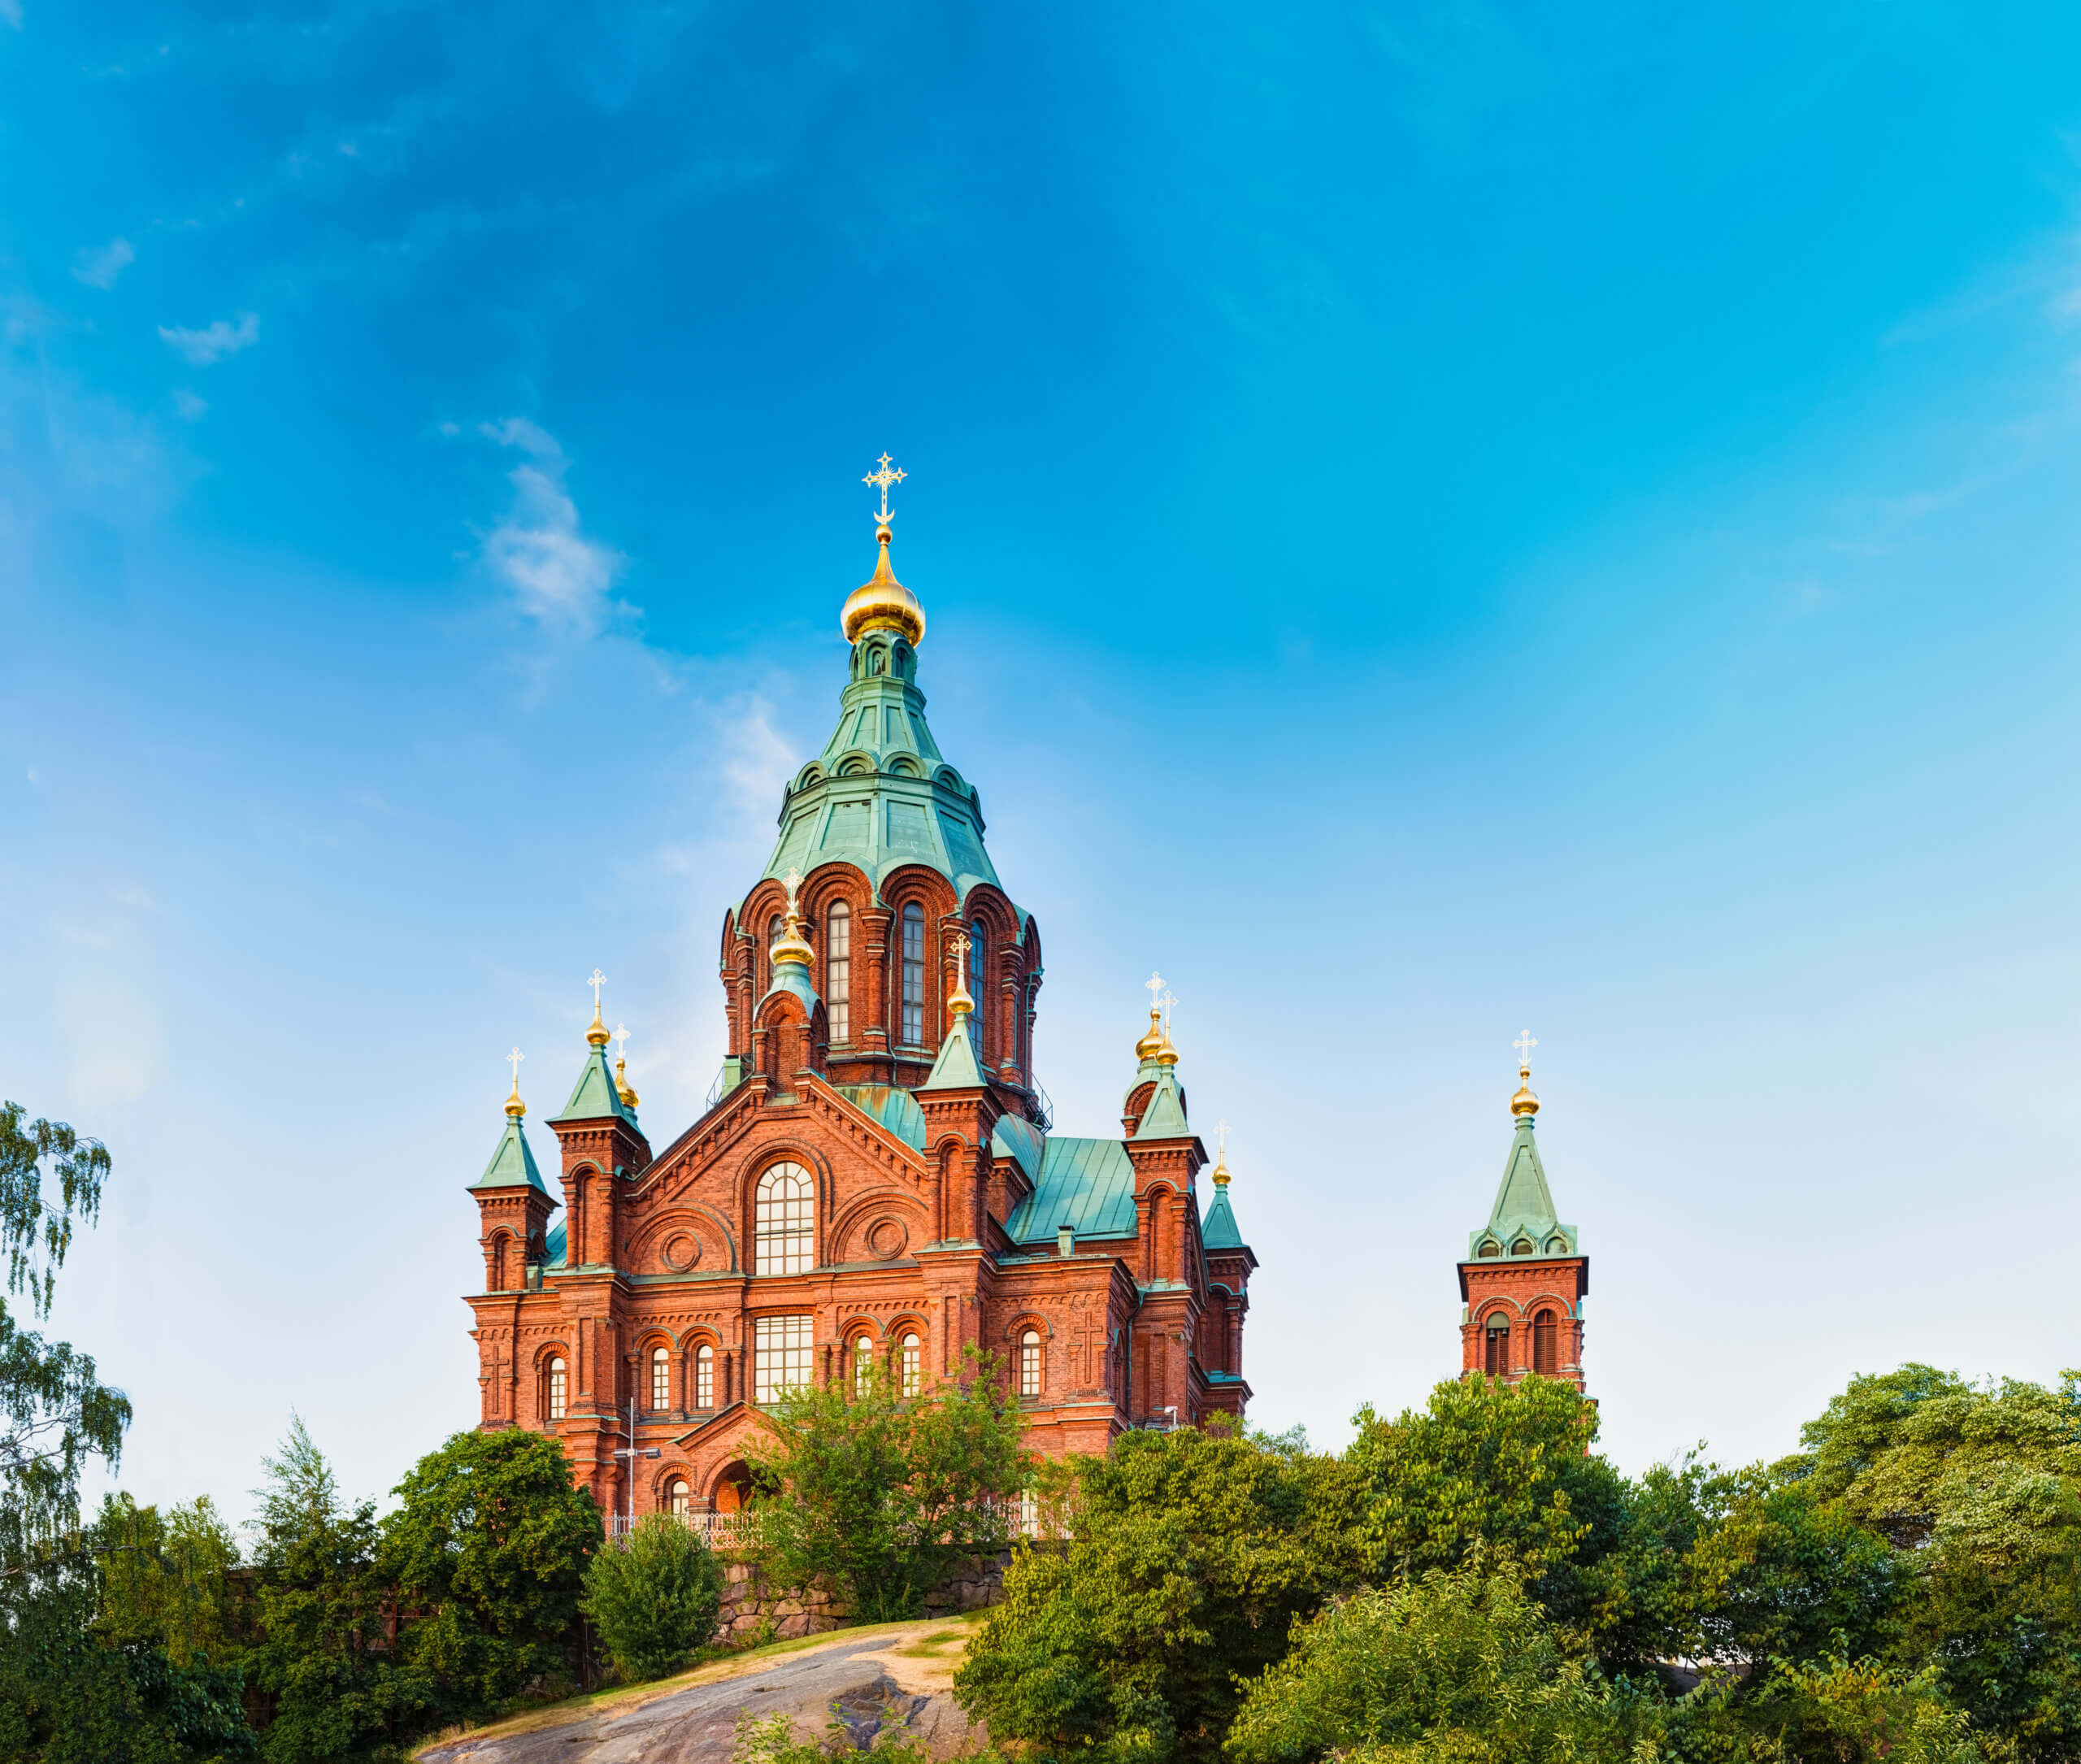 Helsinki kathedraal - Finland - Christoffel Travel